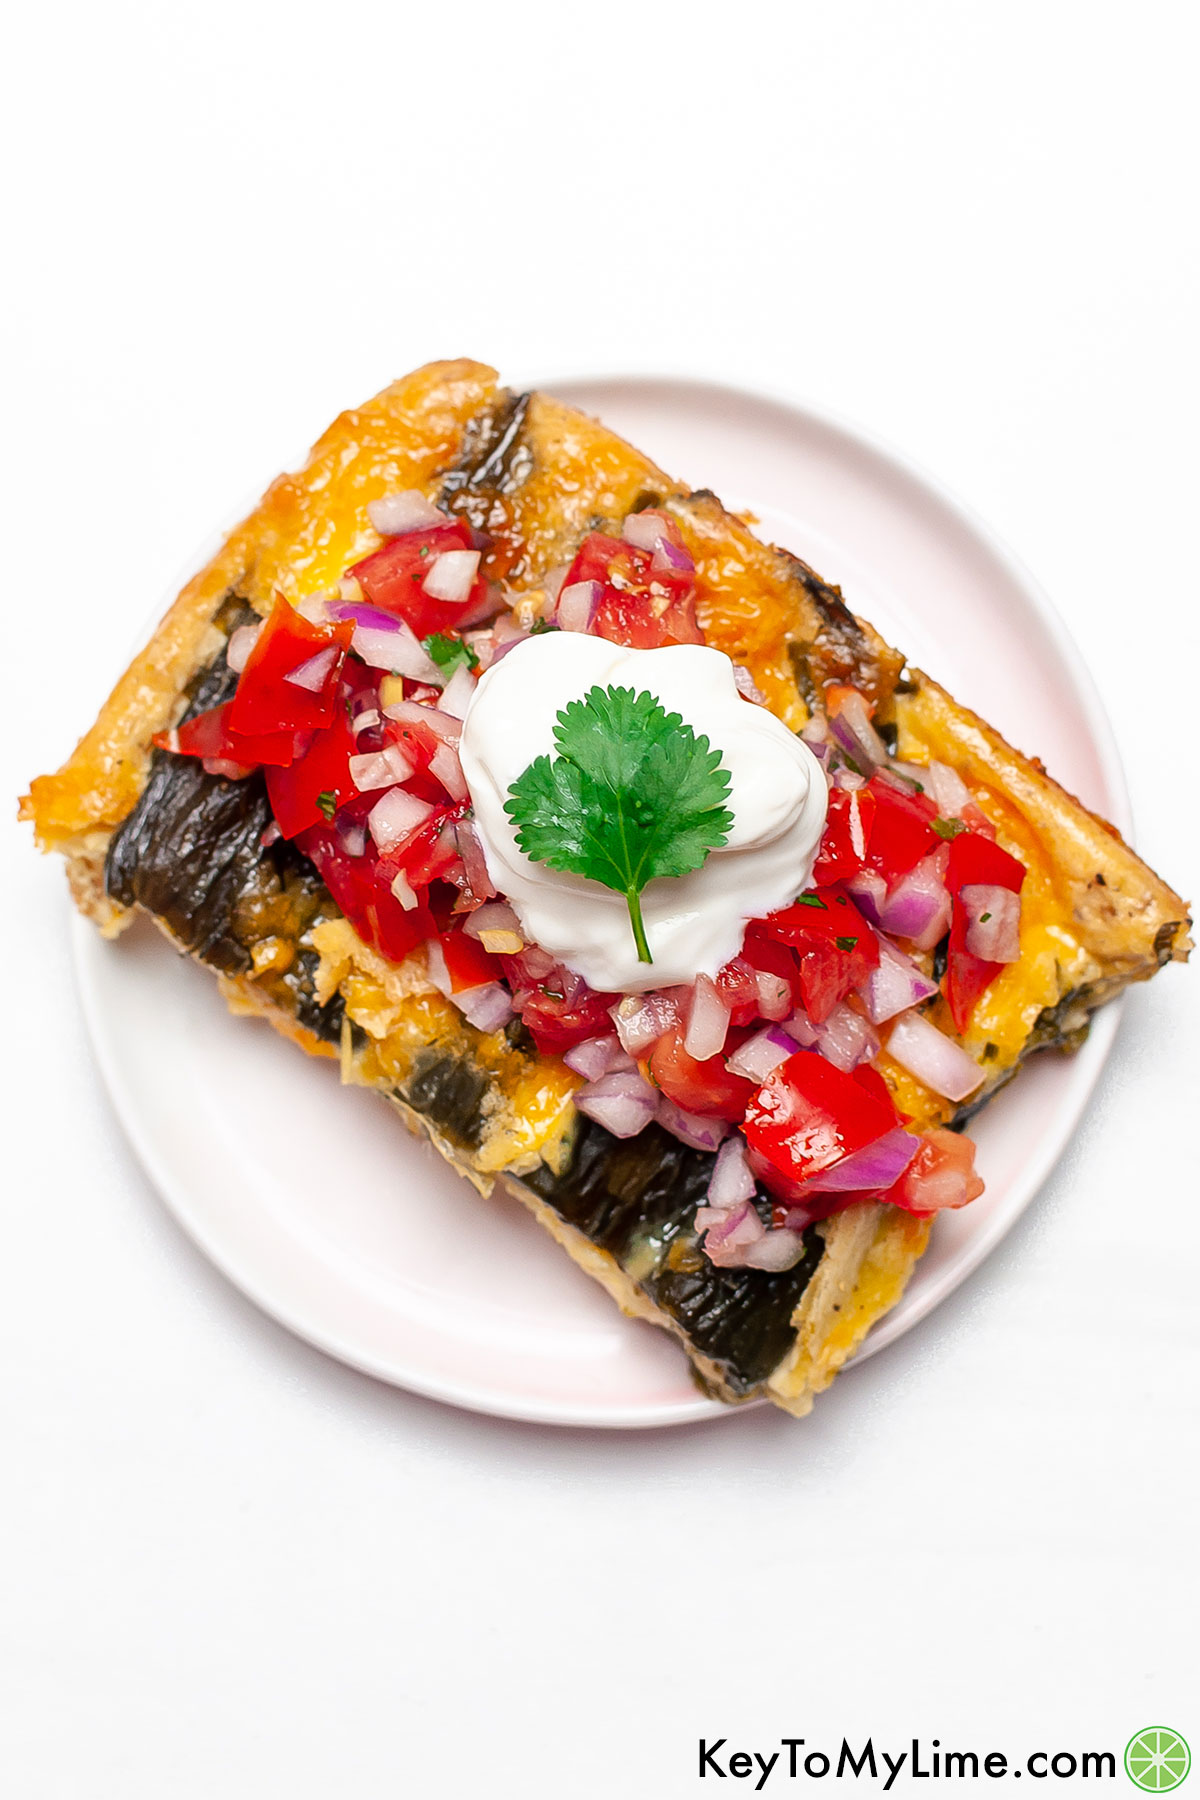 An overhead image of a slice of chile relleno casserole topped with pico de gallo and sour cream.